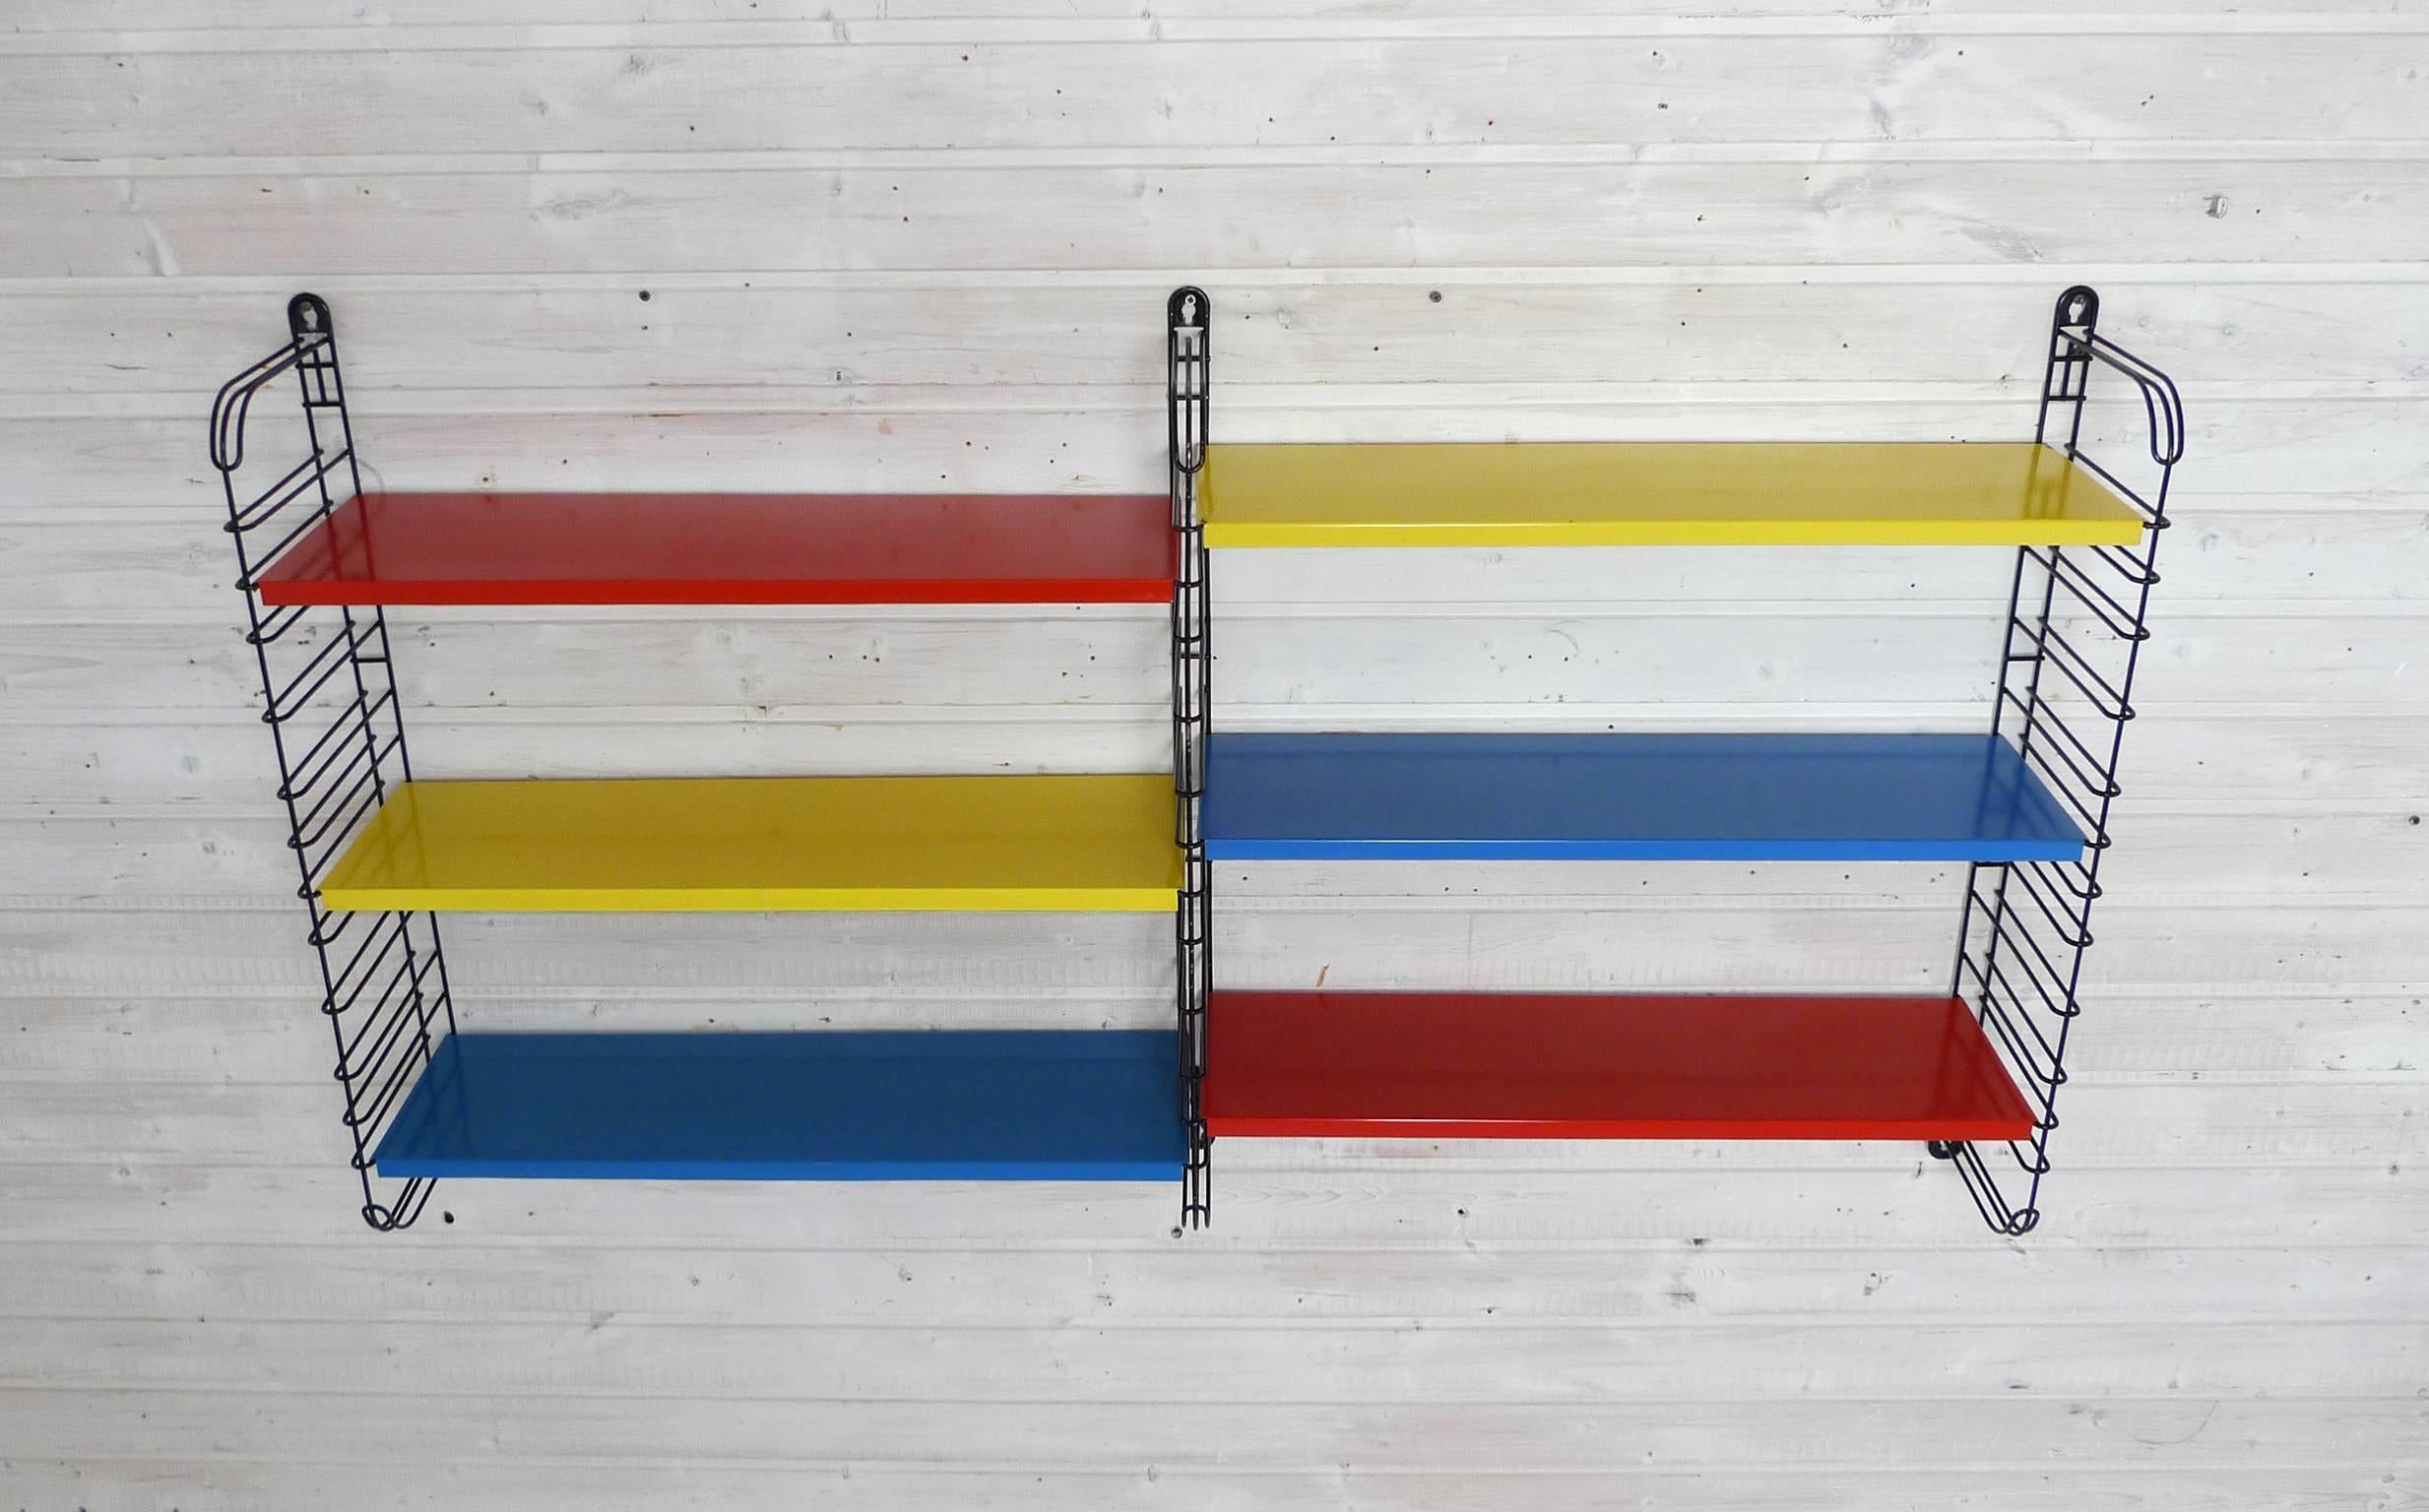 Mid-Century Modern Multicolored Metal Rack by Adrian Dekker for Tomado, Netherlands, 1953